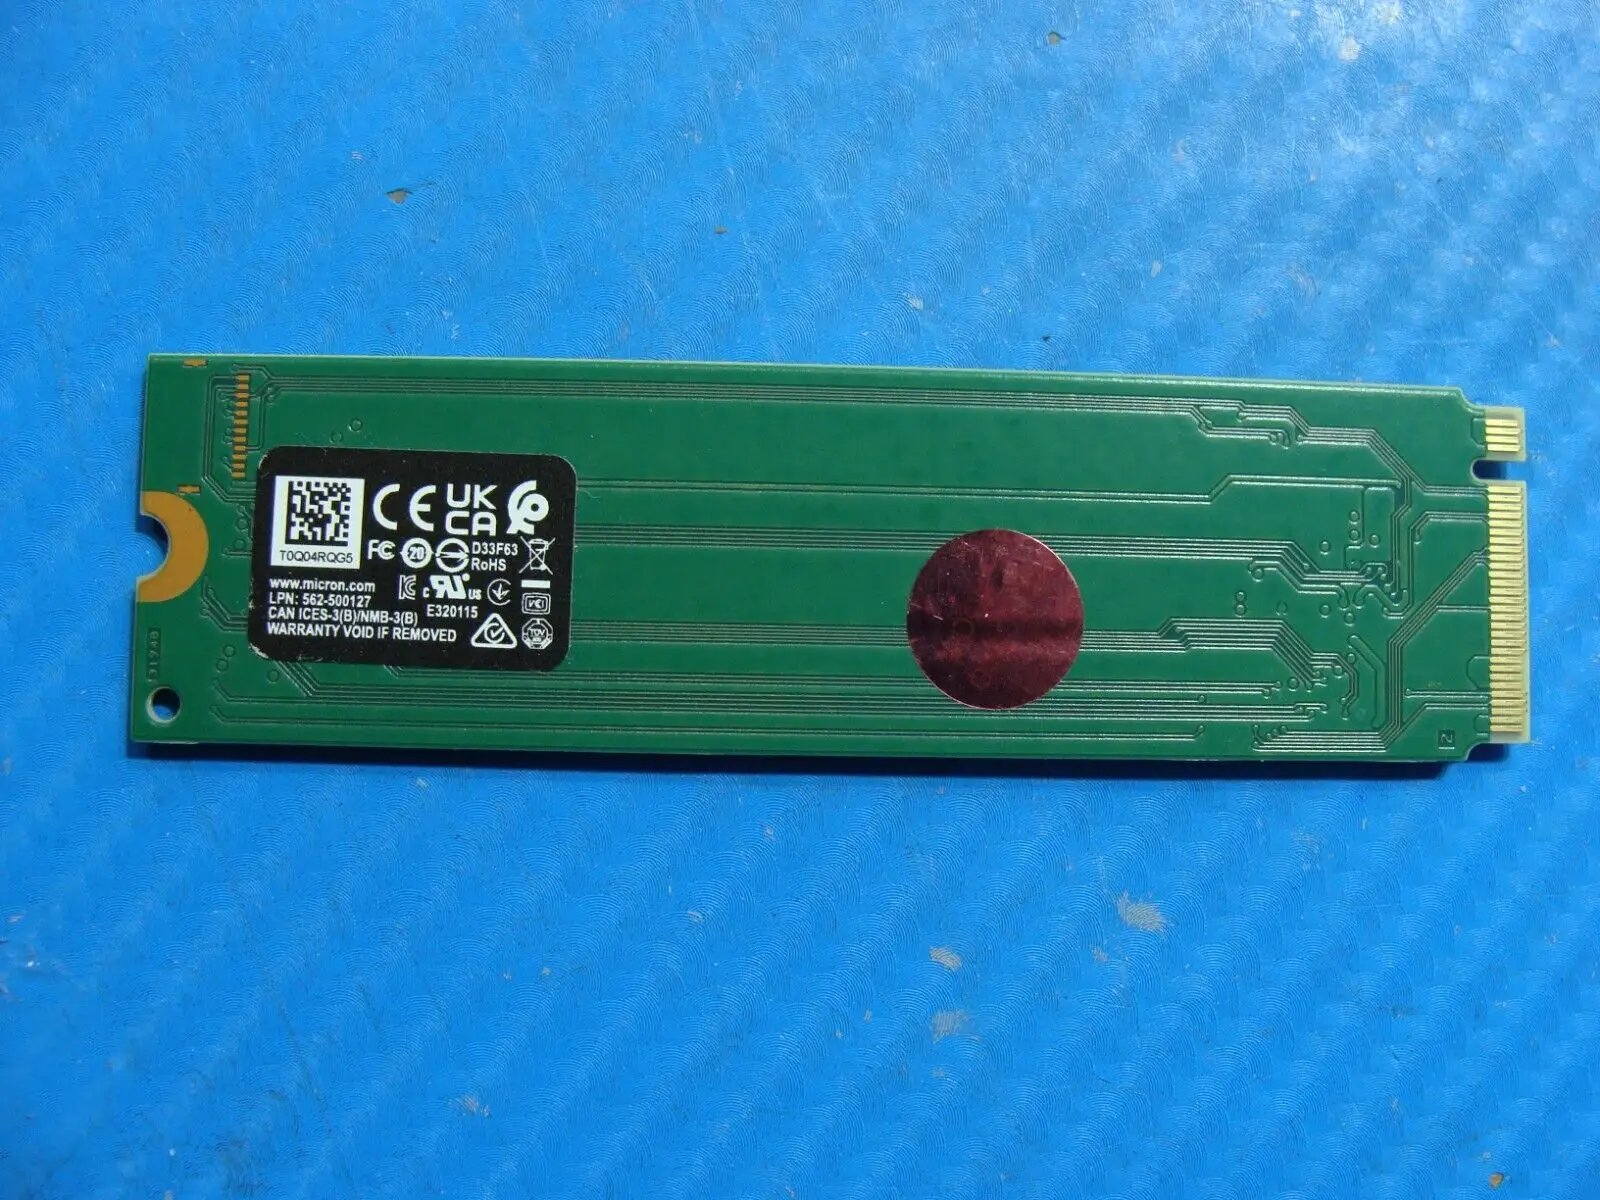 Asus F1400E-SB34 Micron 256GB NVMe SSD Solid State Drive MTFDKBA256TFK-1BC1AABGA